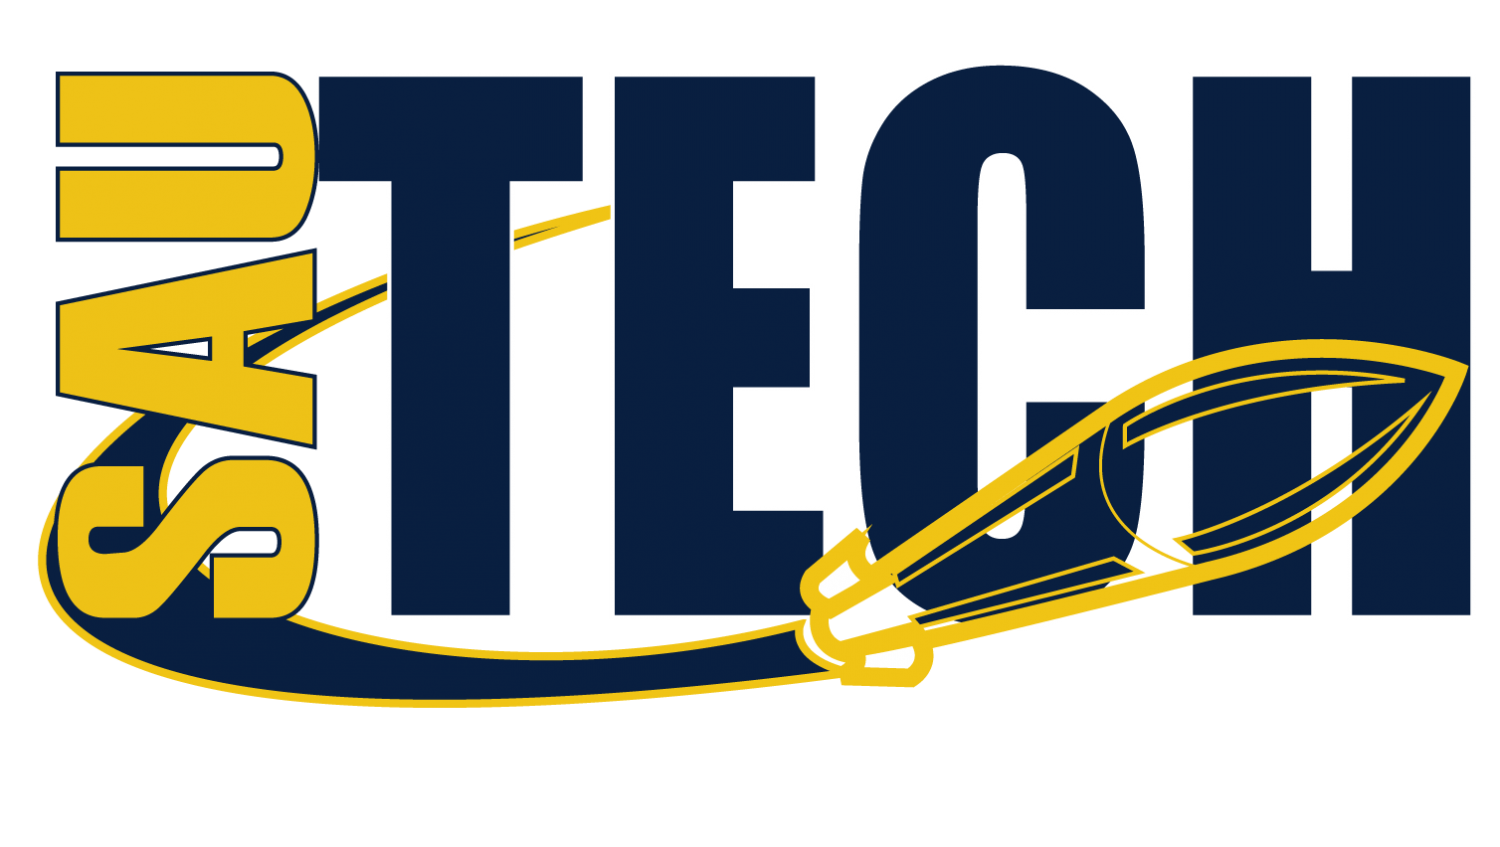 SAU Tech logo with Rocket